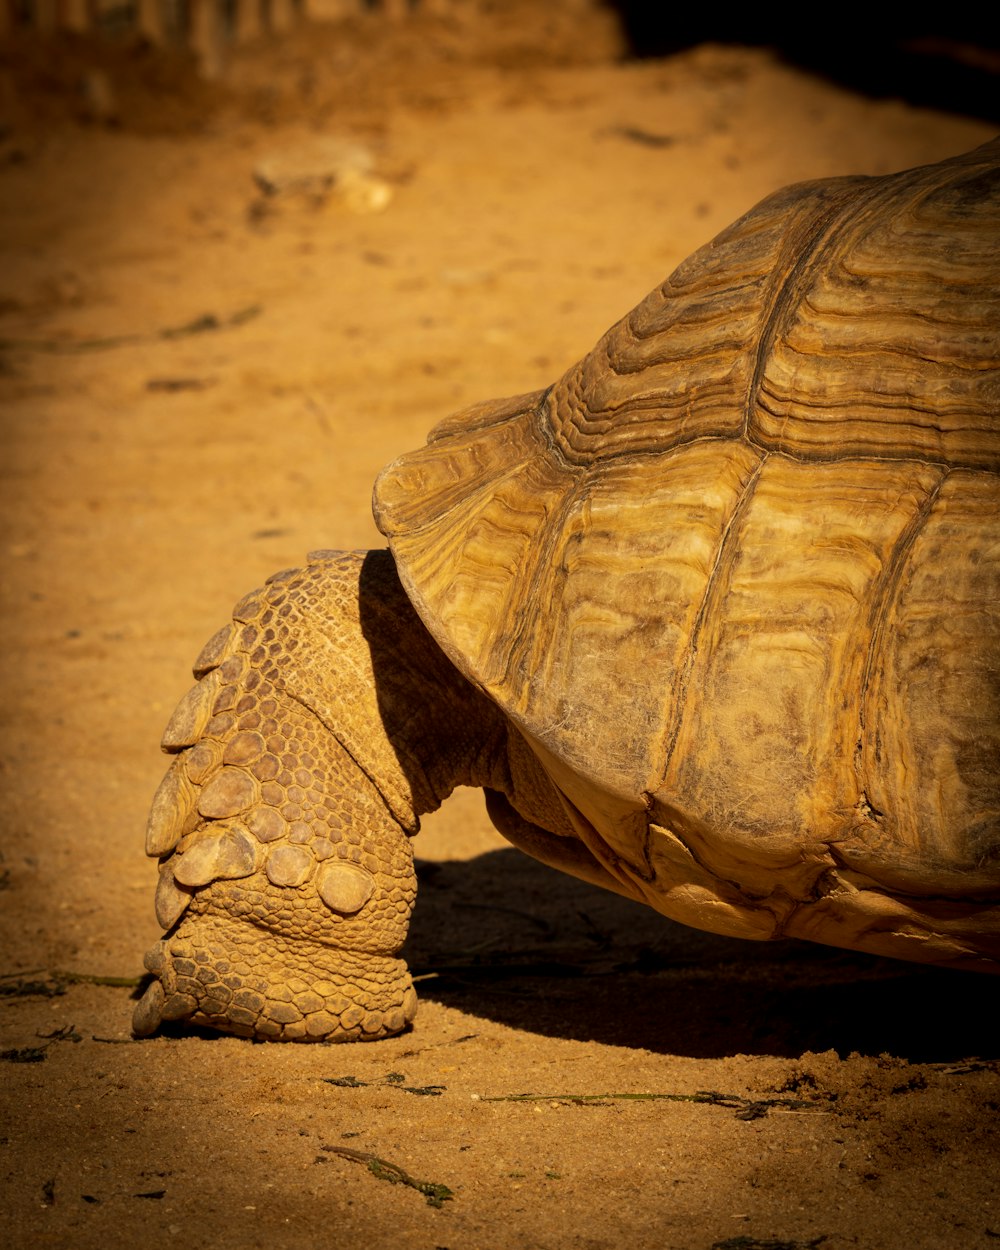 brown turtle on brown sand